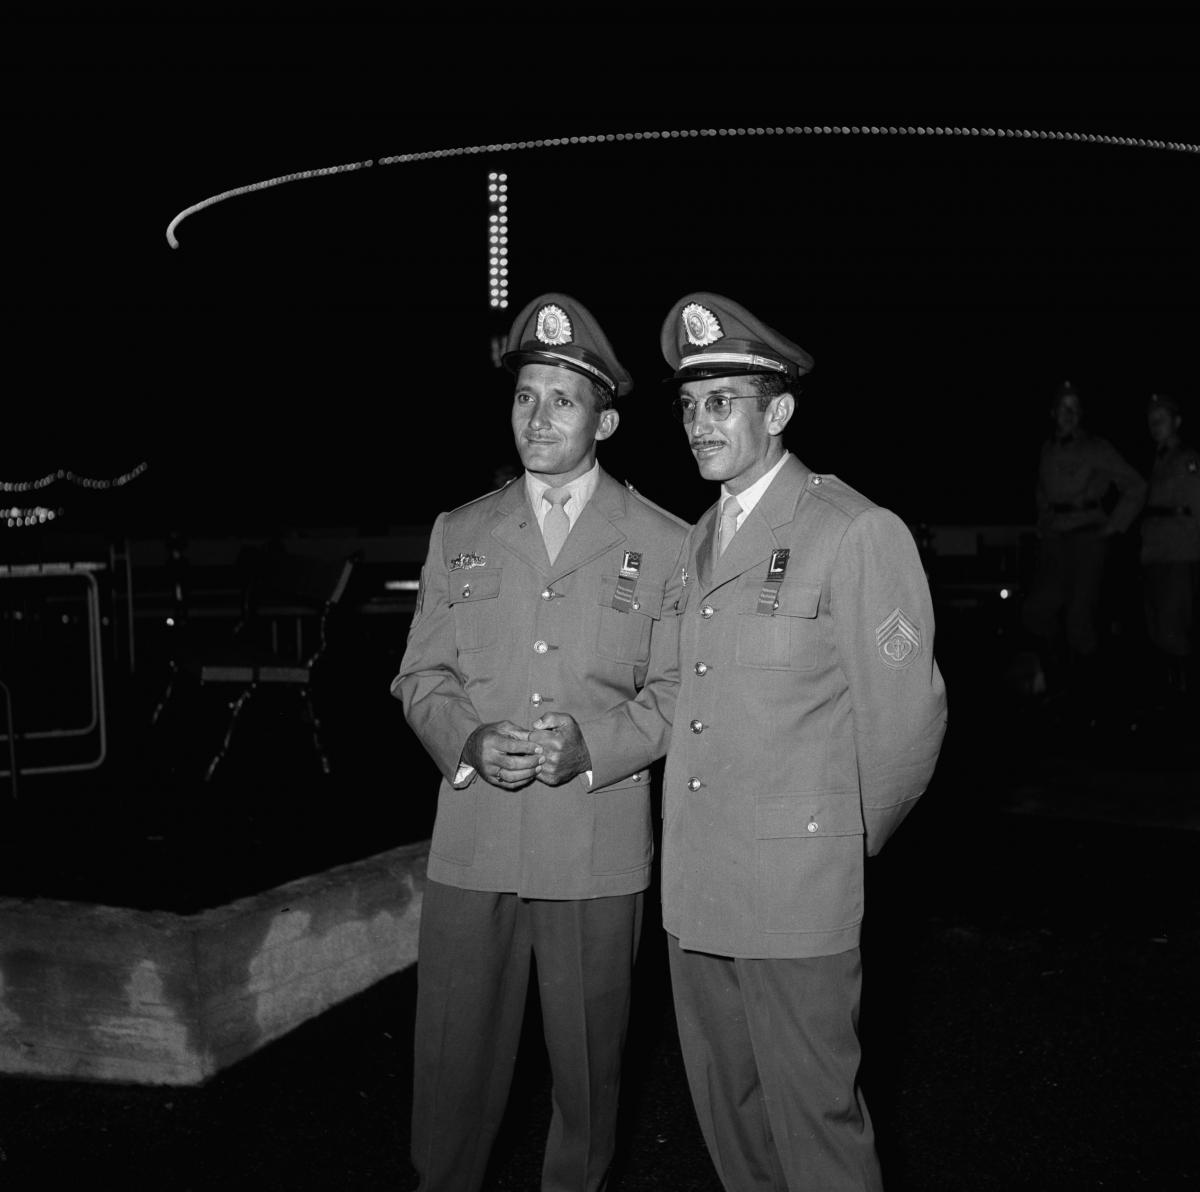 Two men in uniforms